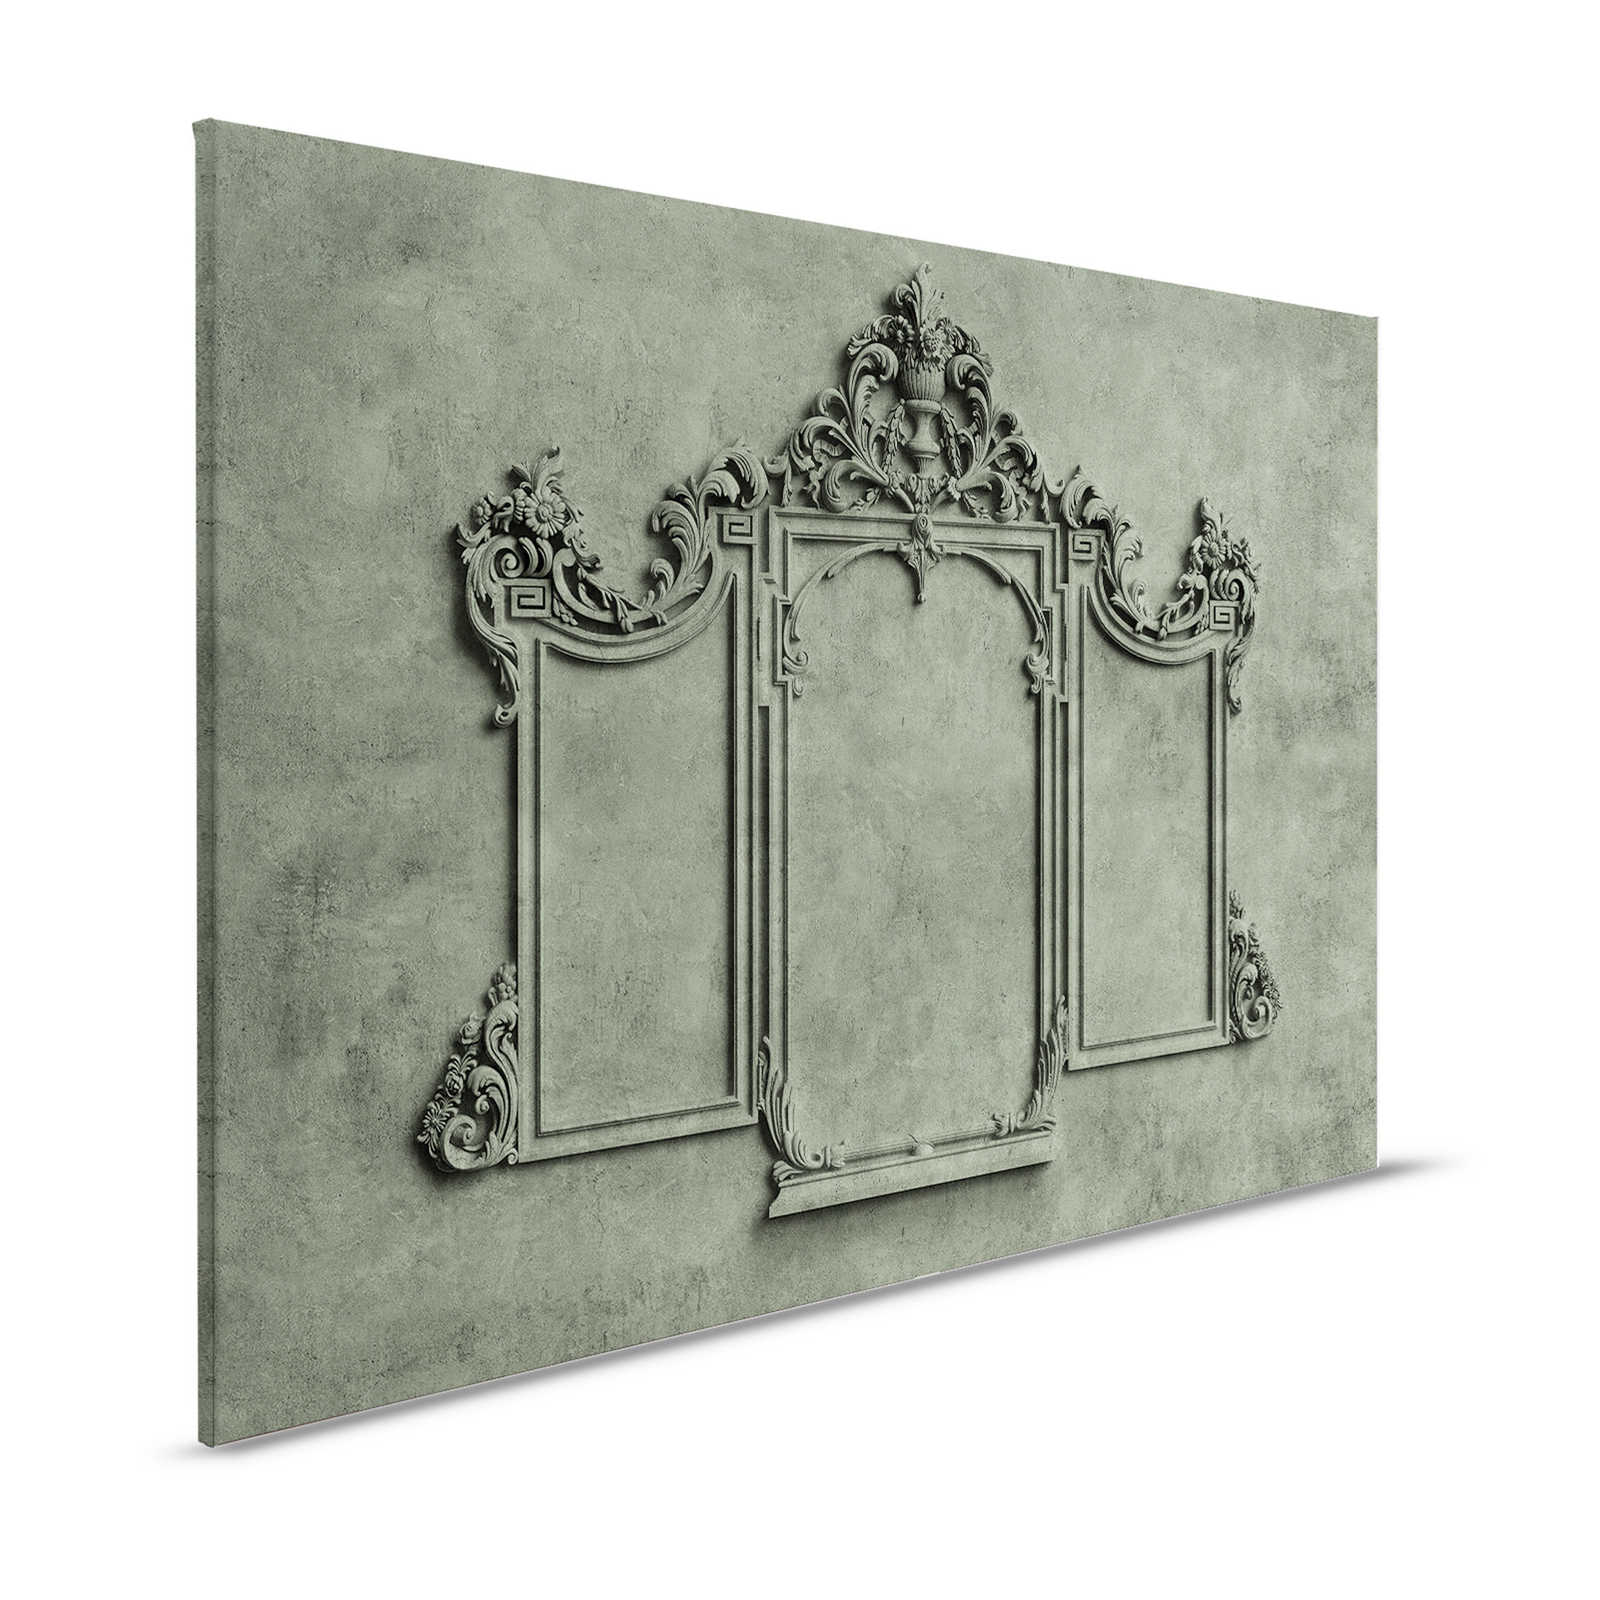 Lyon 2 - Canvas schilderij 3D stucco frame & gipslook in groen - 1.20 m x 0.80 m
